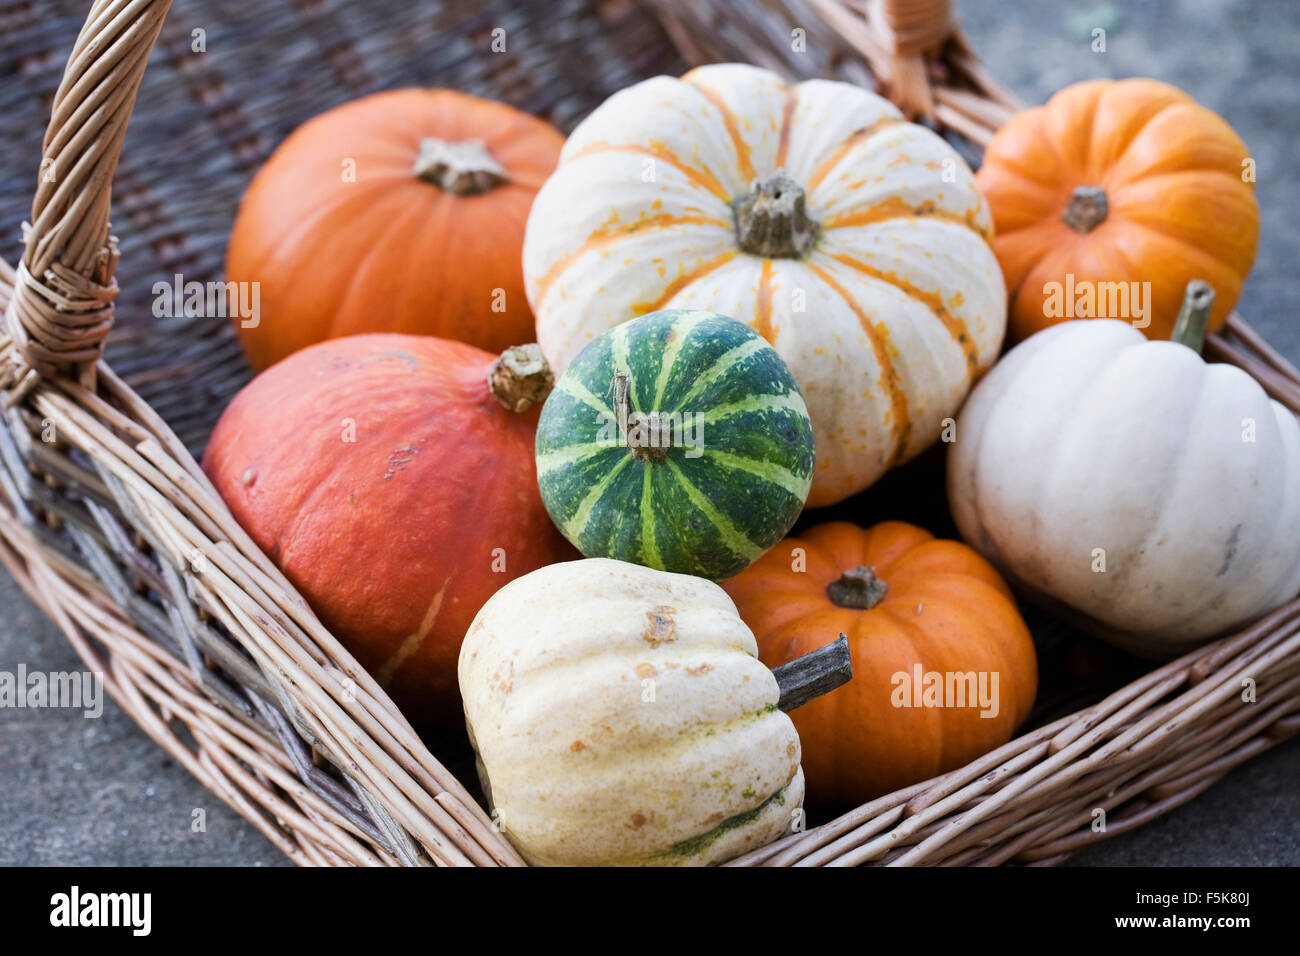 Cucurbita maxima. Basket of assorted squashes and pumpkins. Stock Photo